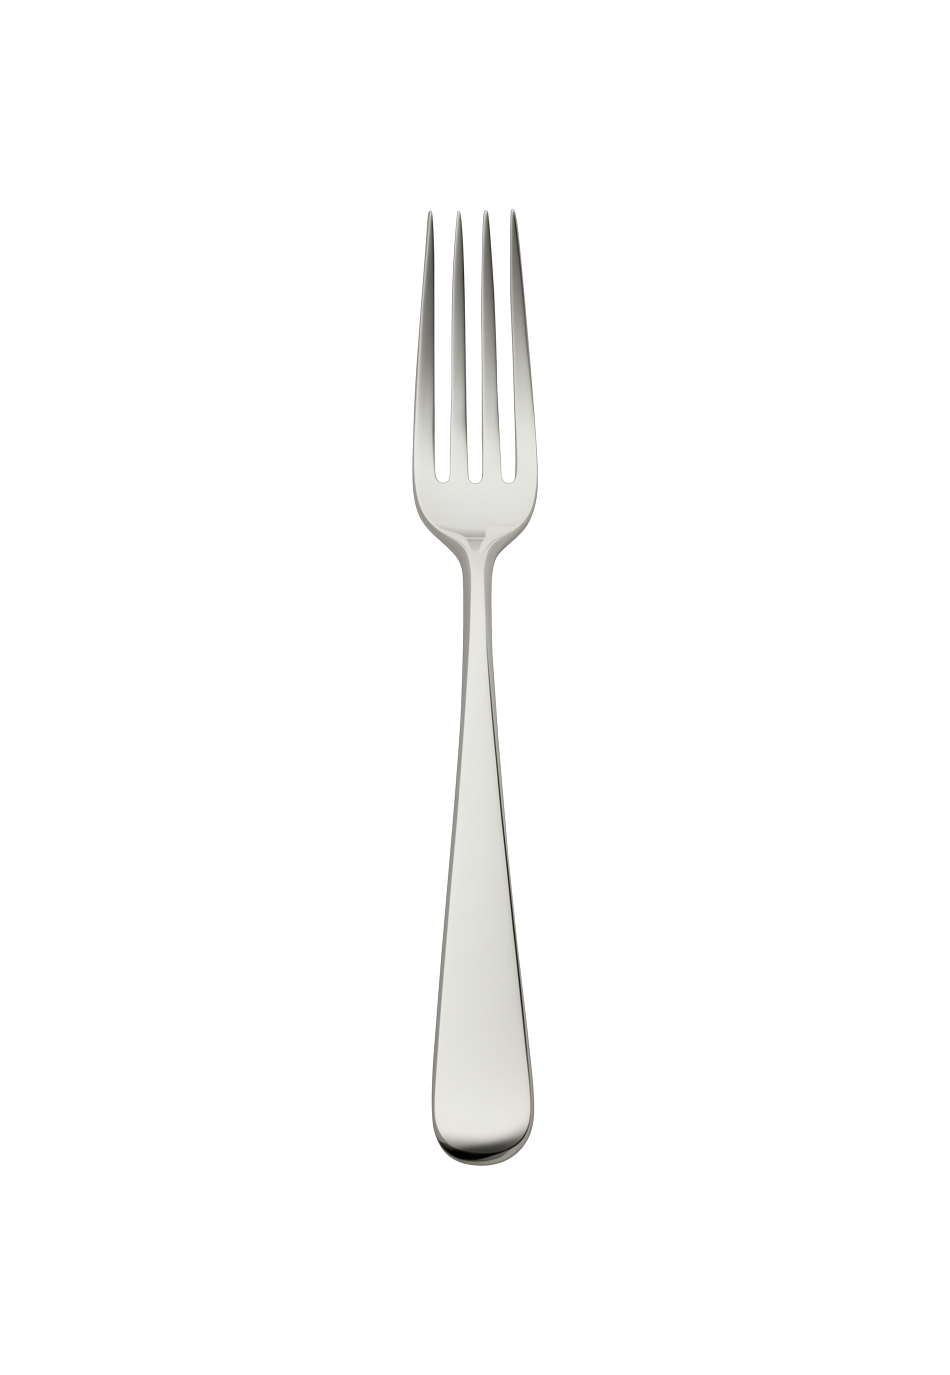 Dante Menu Fork (150g massive silverplated)